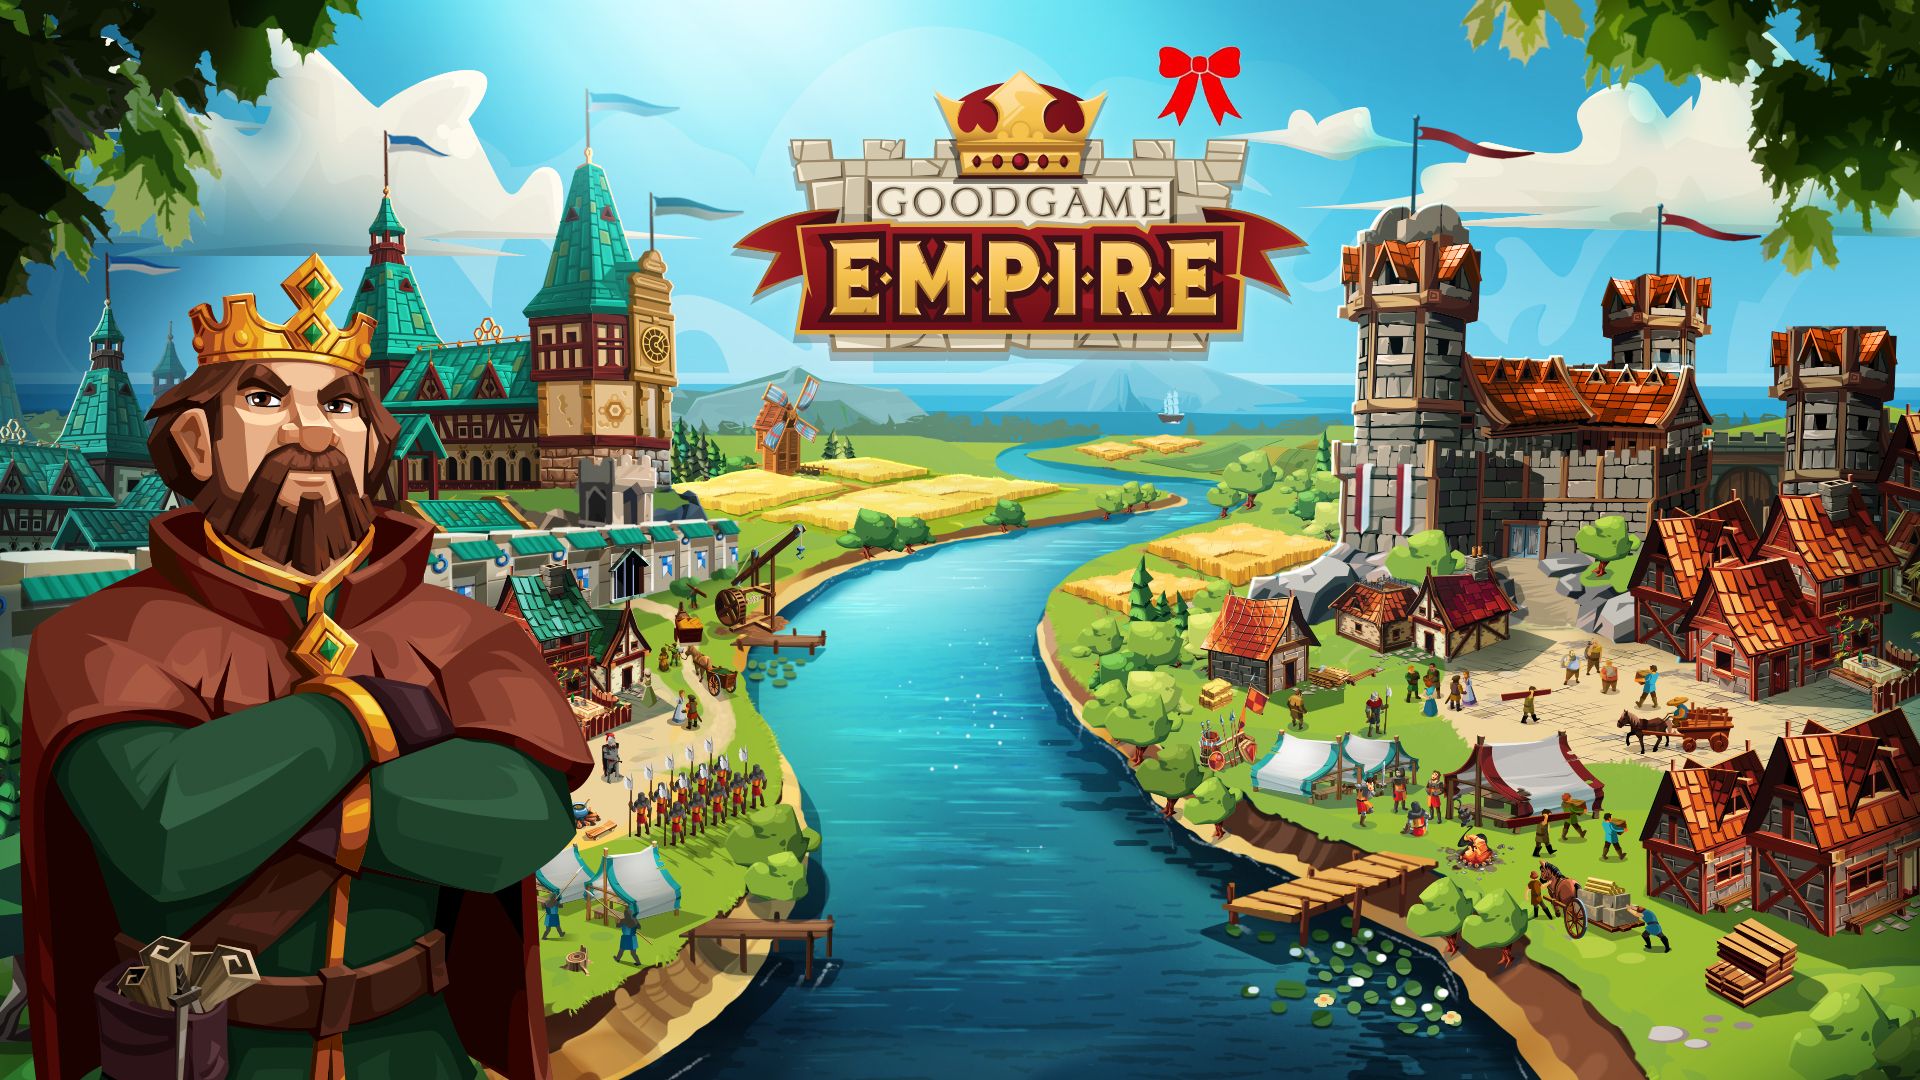 Goodgame Studios celebrates 10 years Goodgame Empire | Gamecity Hamburg